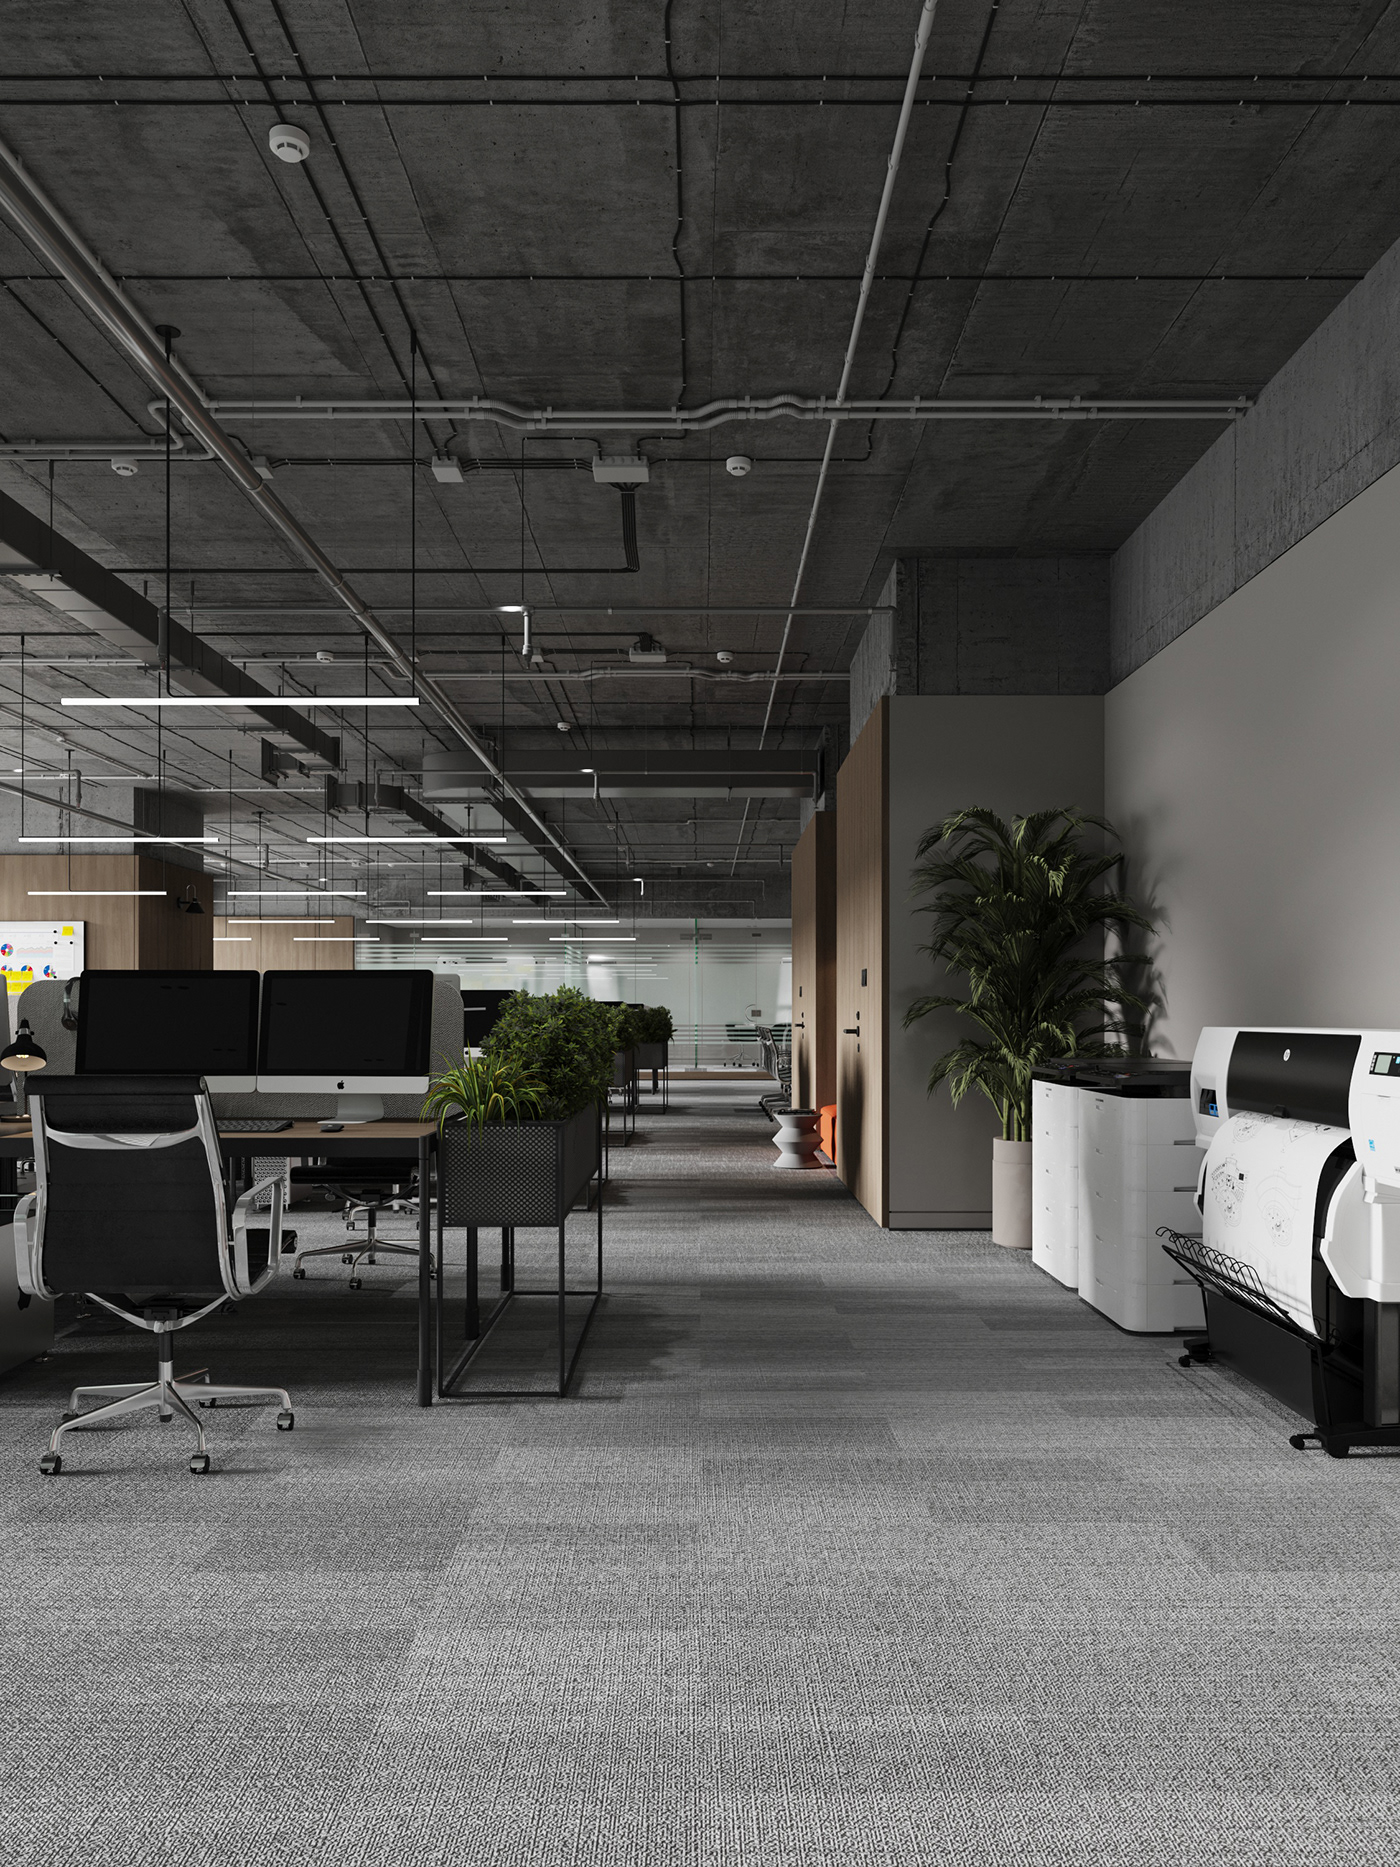 Office Design officedesign Office Interior Studia54 cozy tolko archviz administration